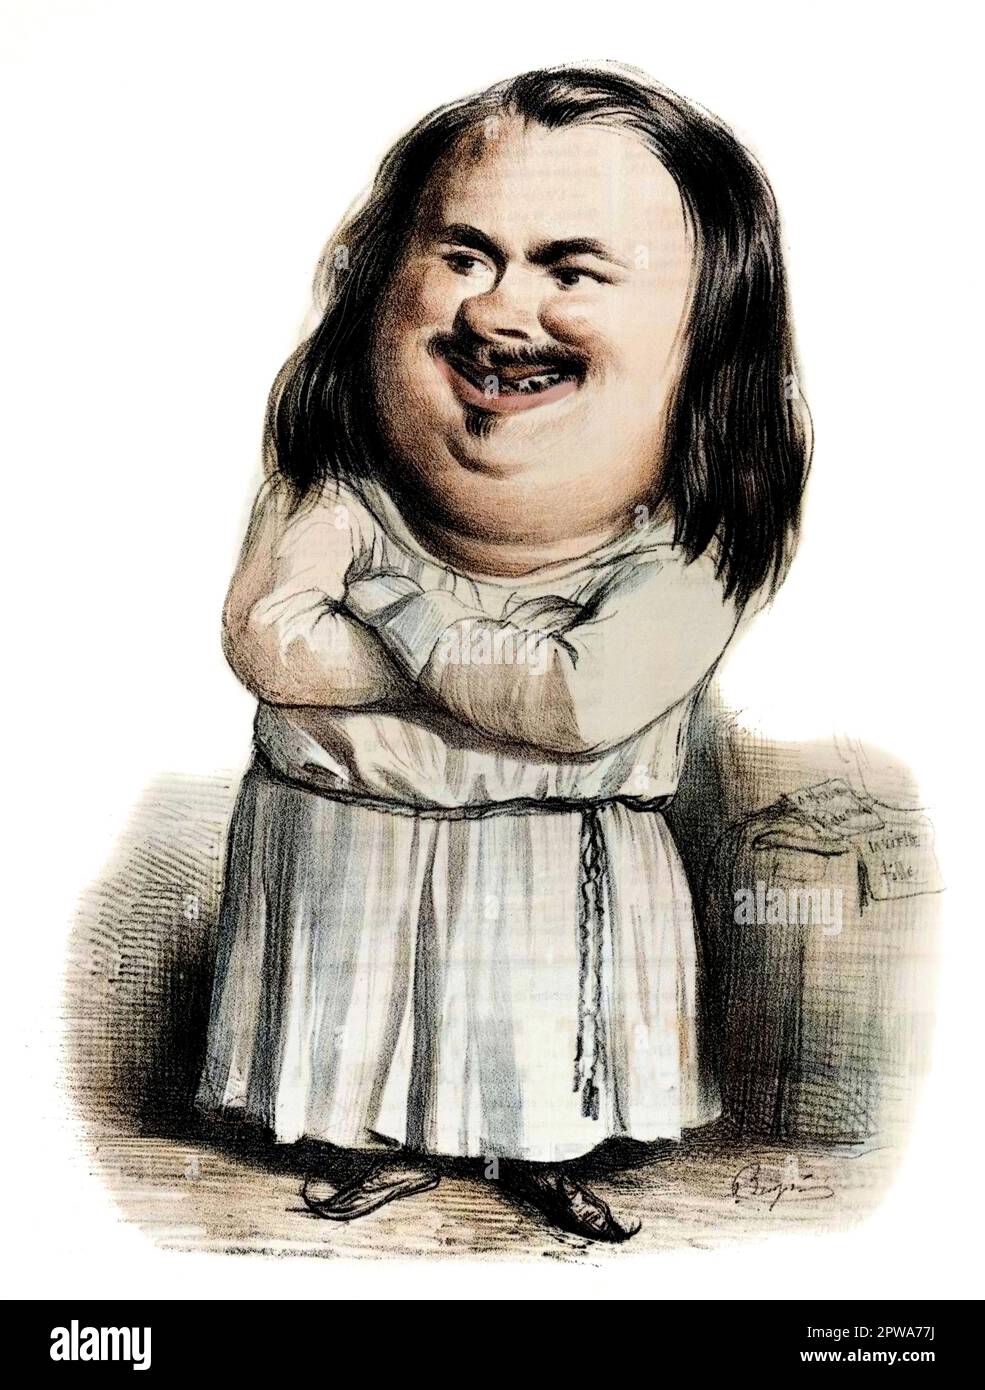 Caricature de Honore de Balzac (1799-1850) en moine - in 'Charivari' du 12/10/1838 - Colorisation d'apres l'originale Foto Stock